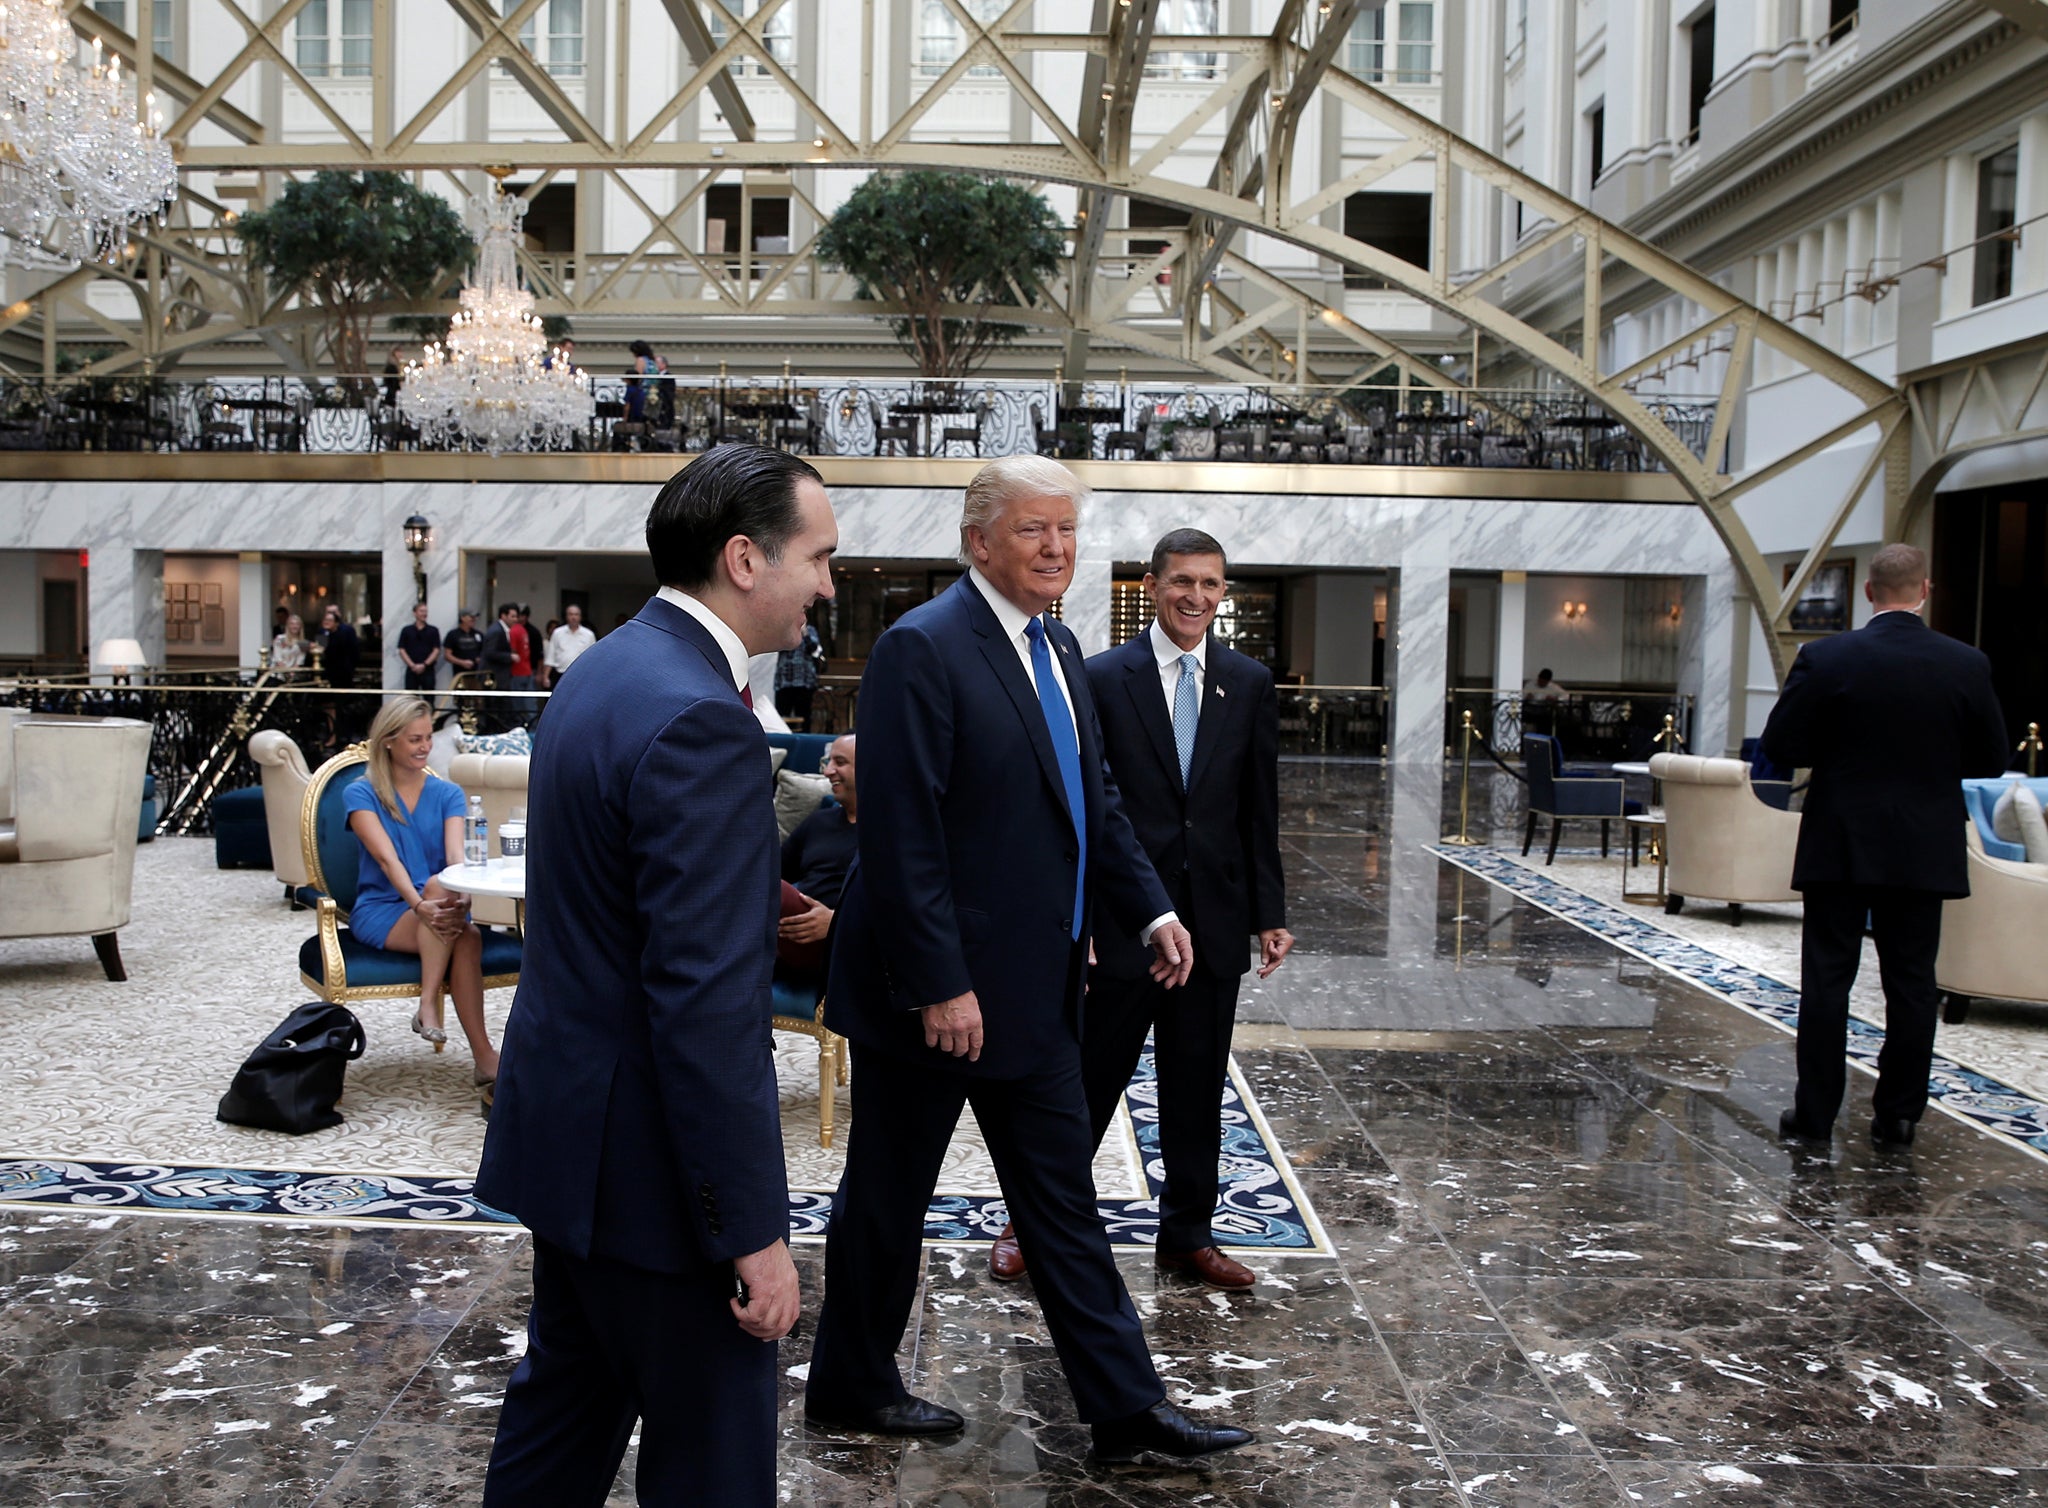 Republican presidential nominee Donald Trump walks through the atrium of his new Trump International Hotel in Washington, D.C